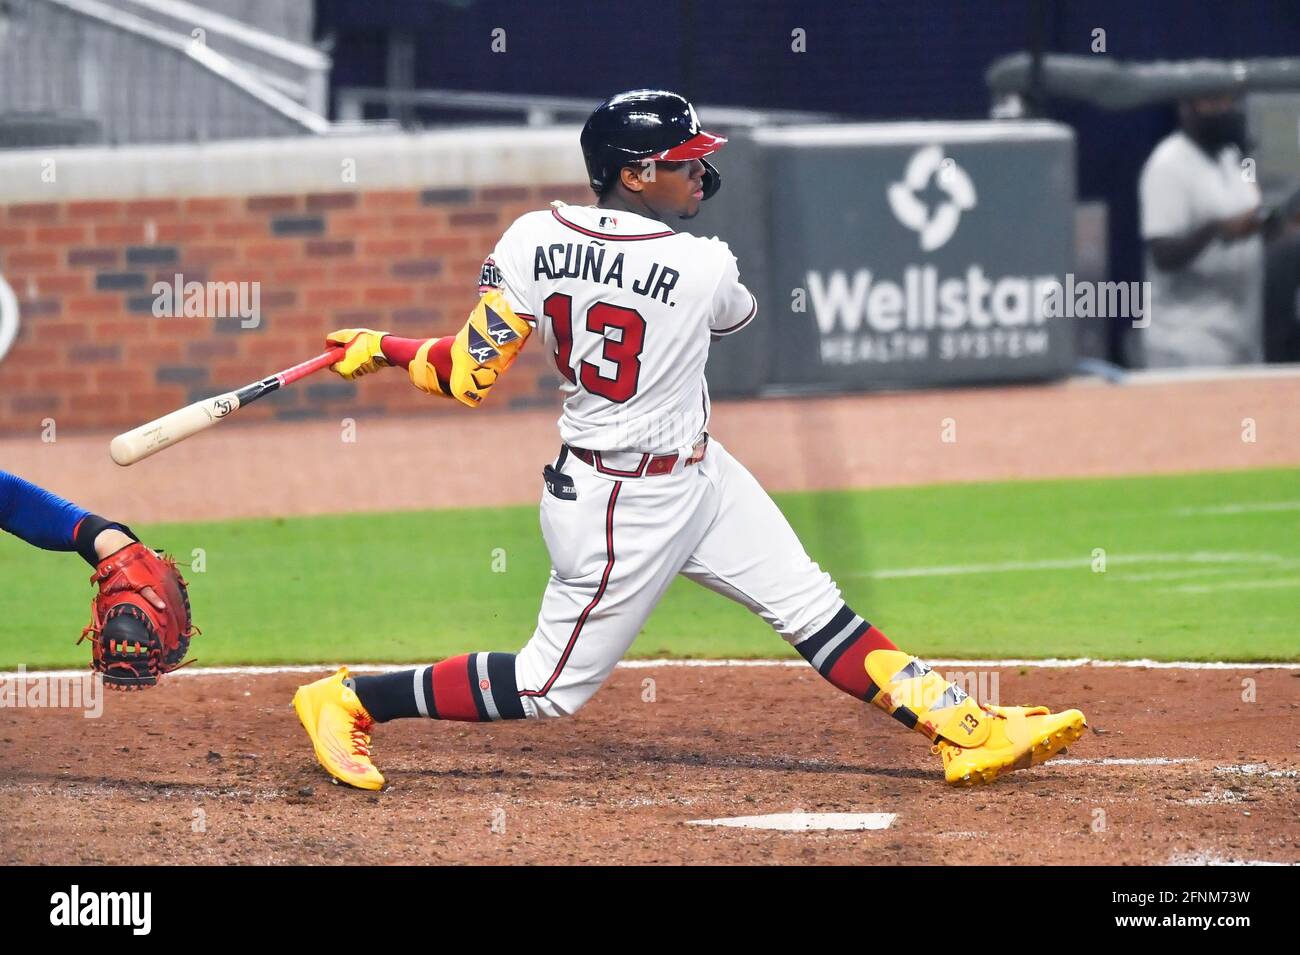 April 29, 2021: Atlanta Braves outfielder Ronald Acuna Jr. runs to